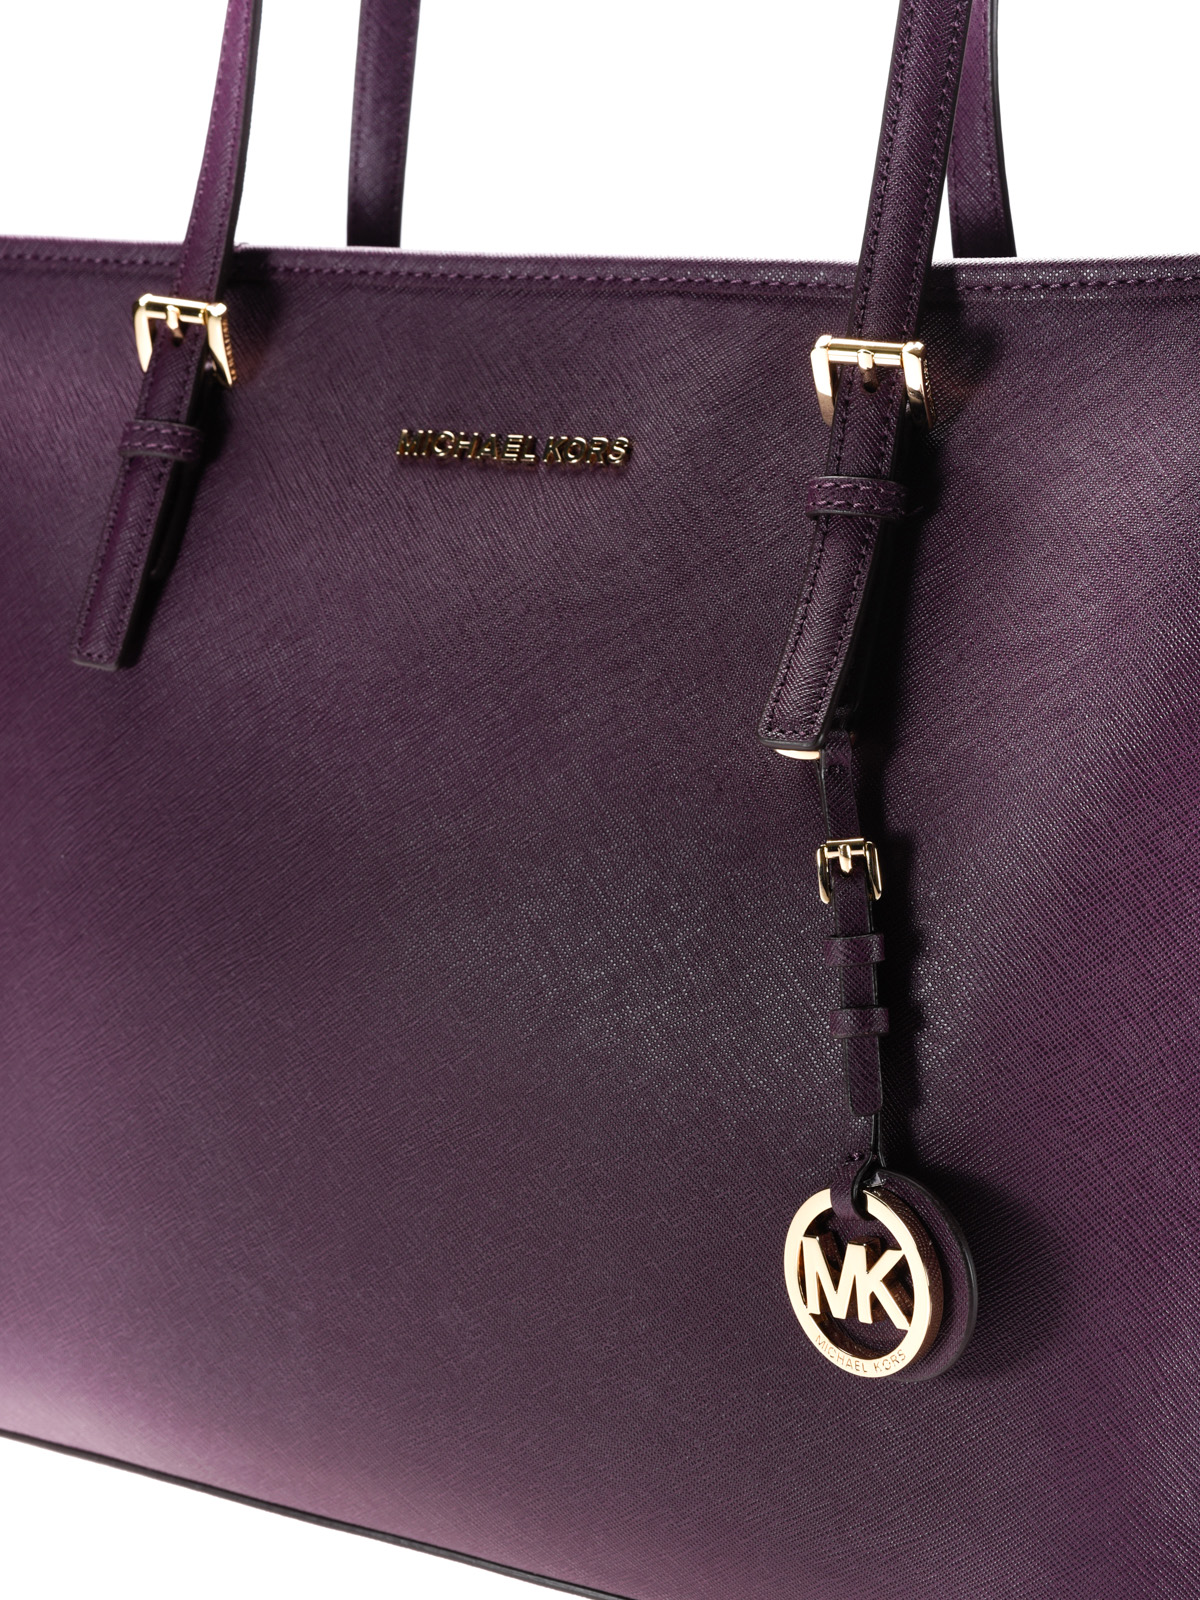 MK purple purse